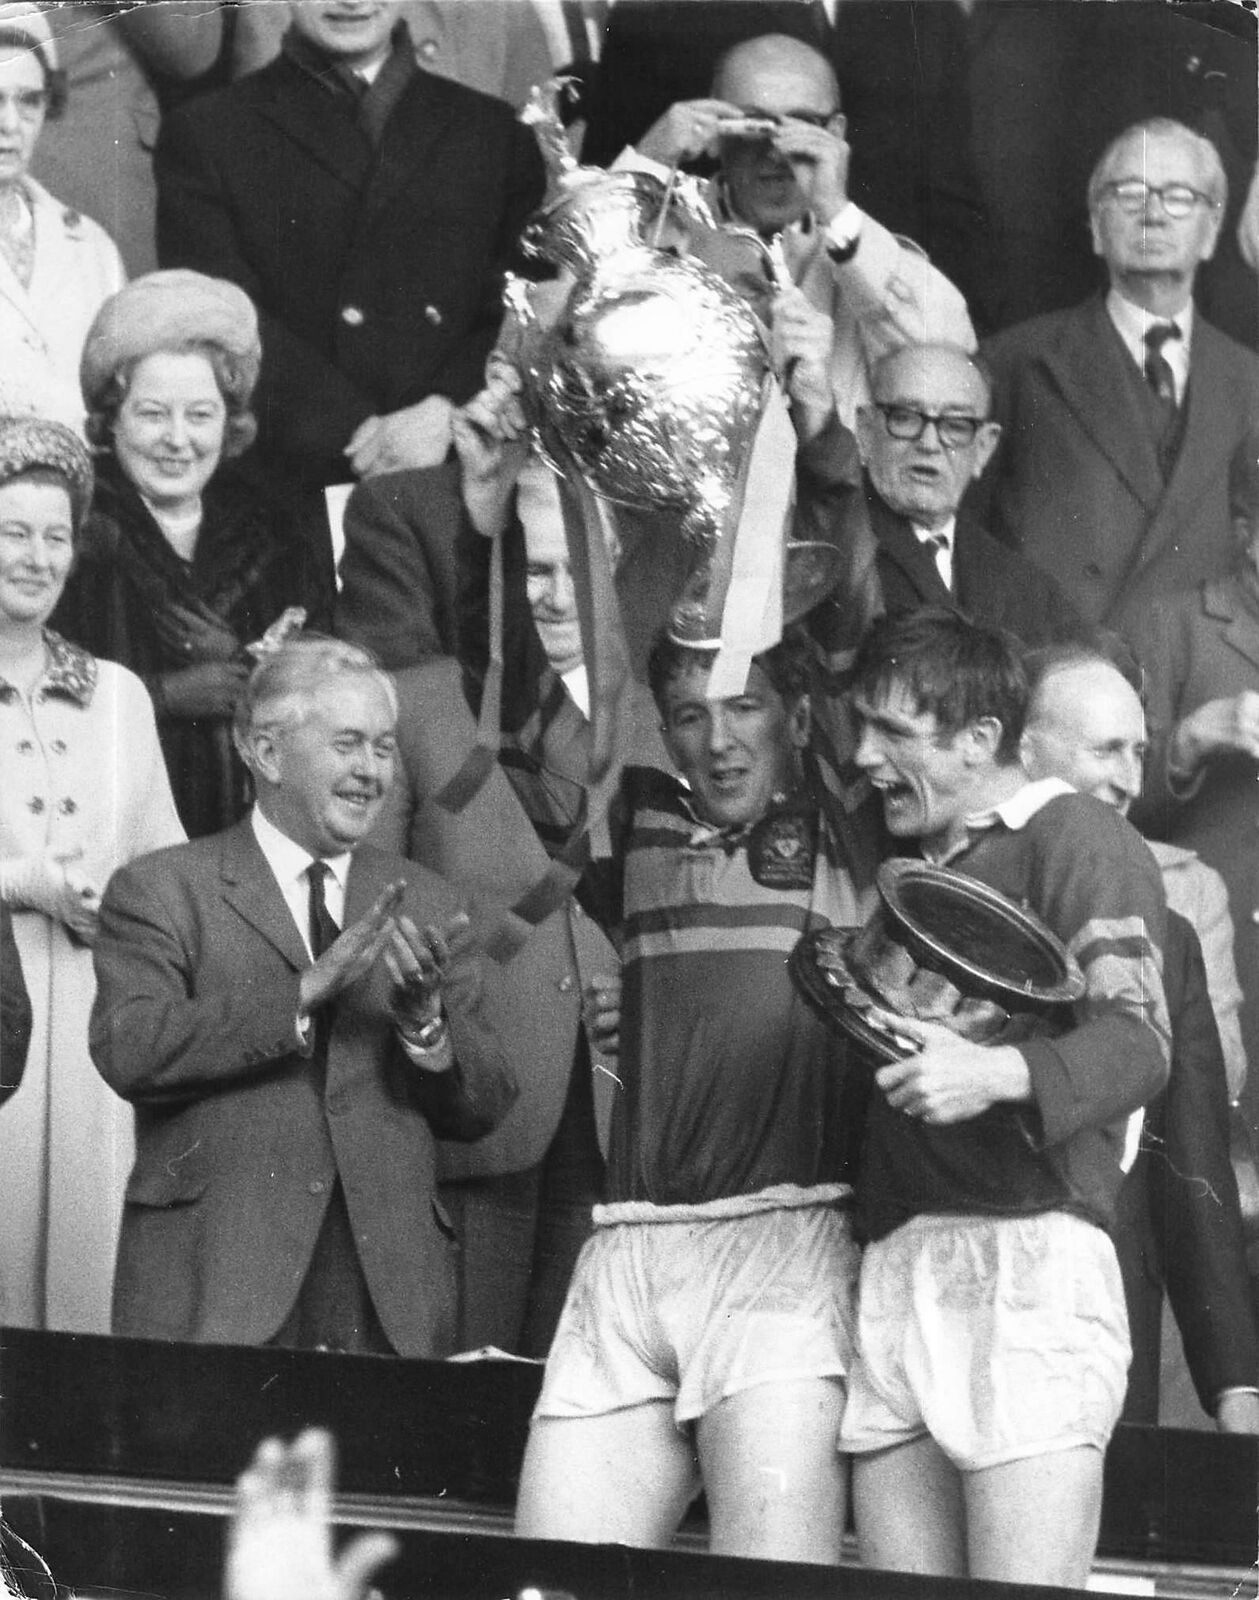 1968 Press Photo PM Wilson Applauds Leeds Captain Rugby Cup Finals trophy sports